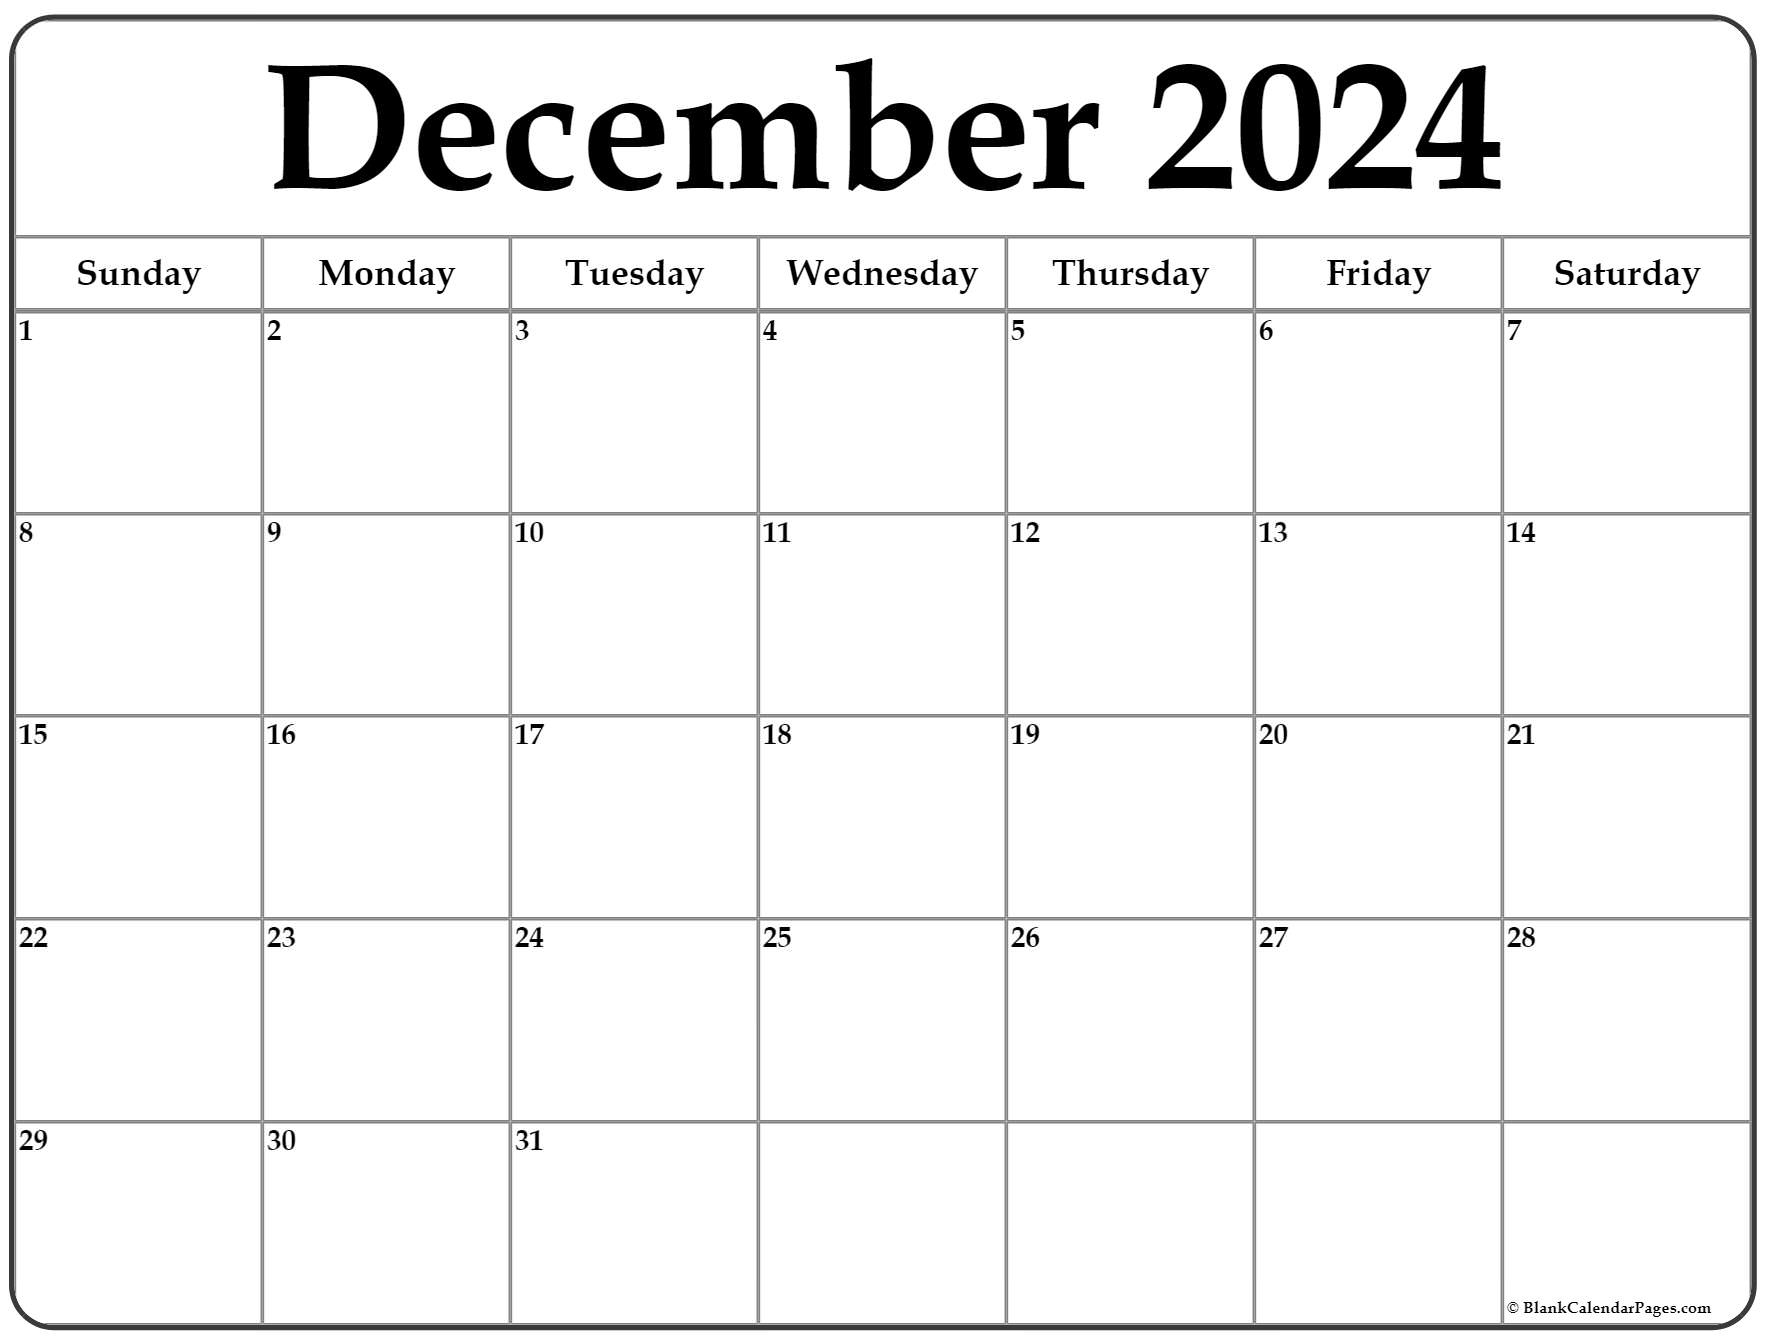 December 2024 Calendar | Free Printable Calendar inside Free Printable Calendar 2024 Deember